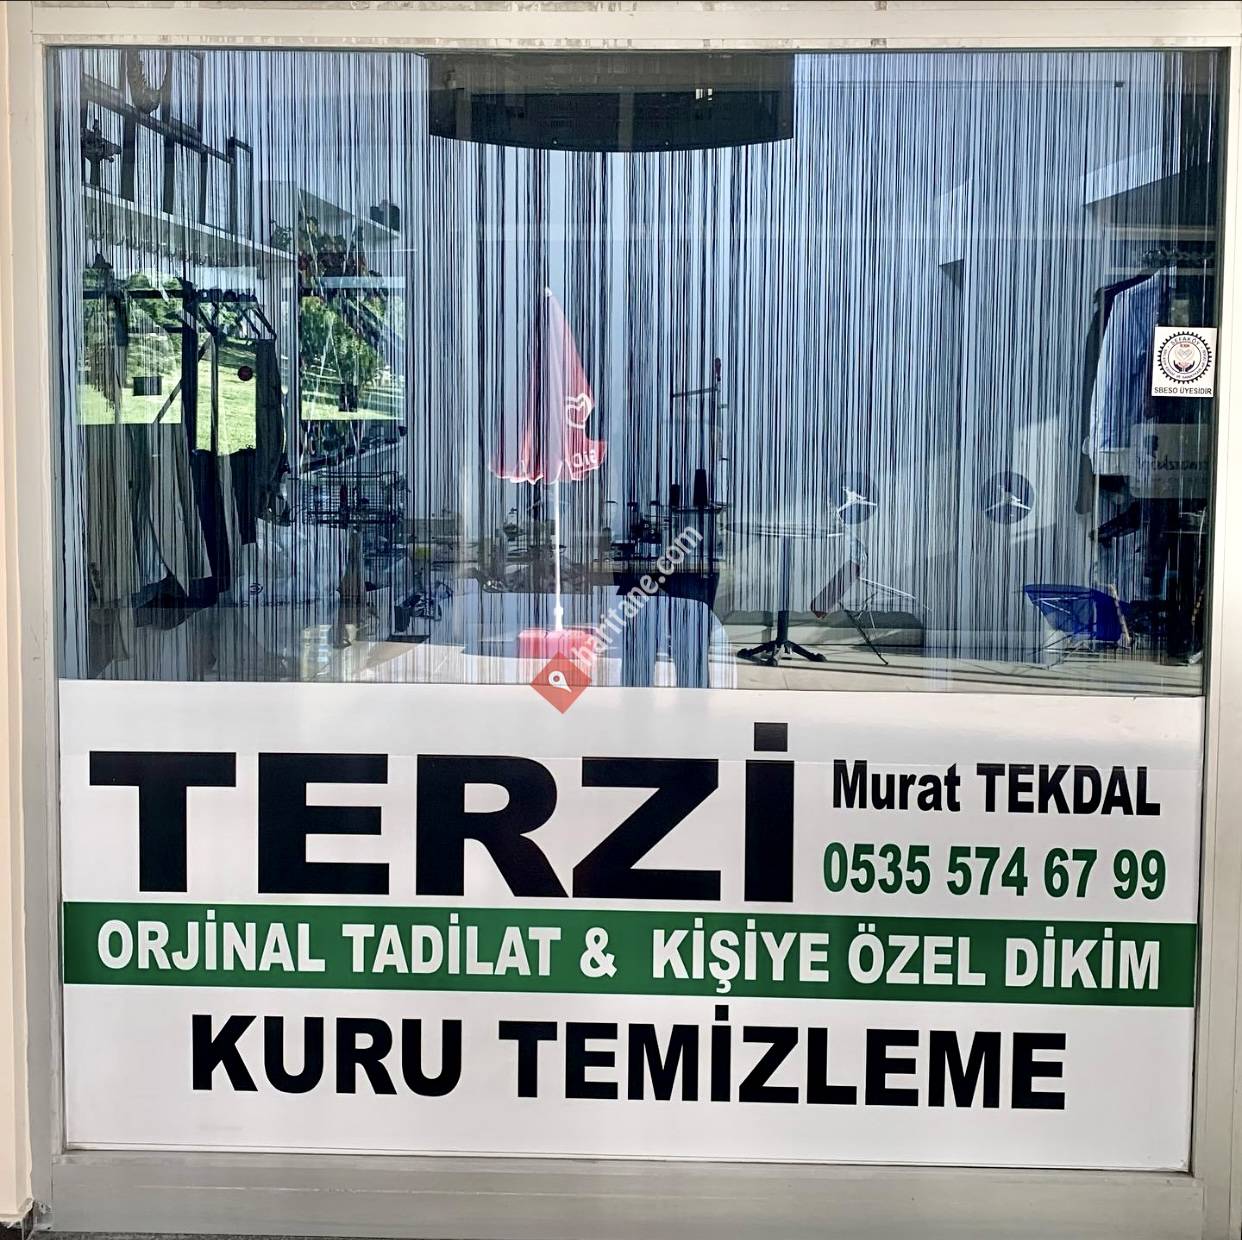 Terzi Murat Tekdal